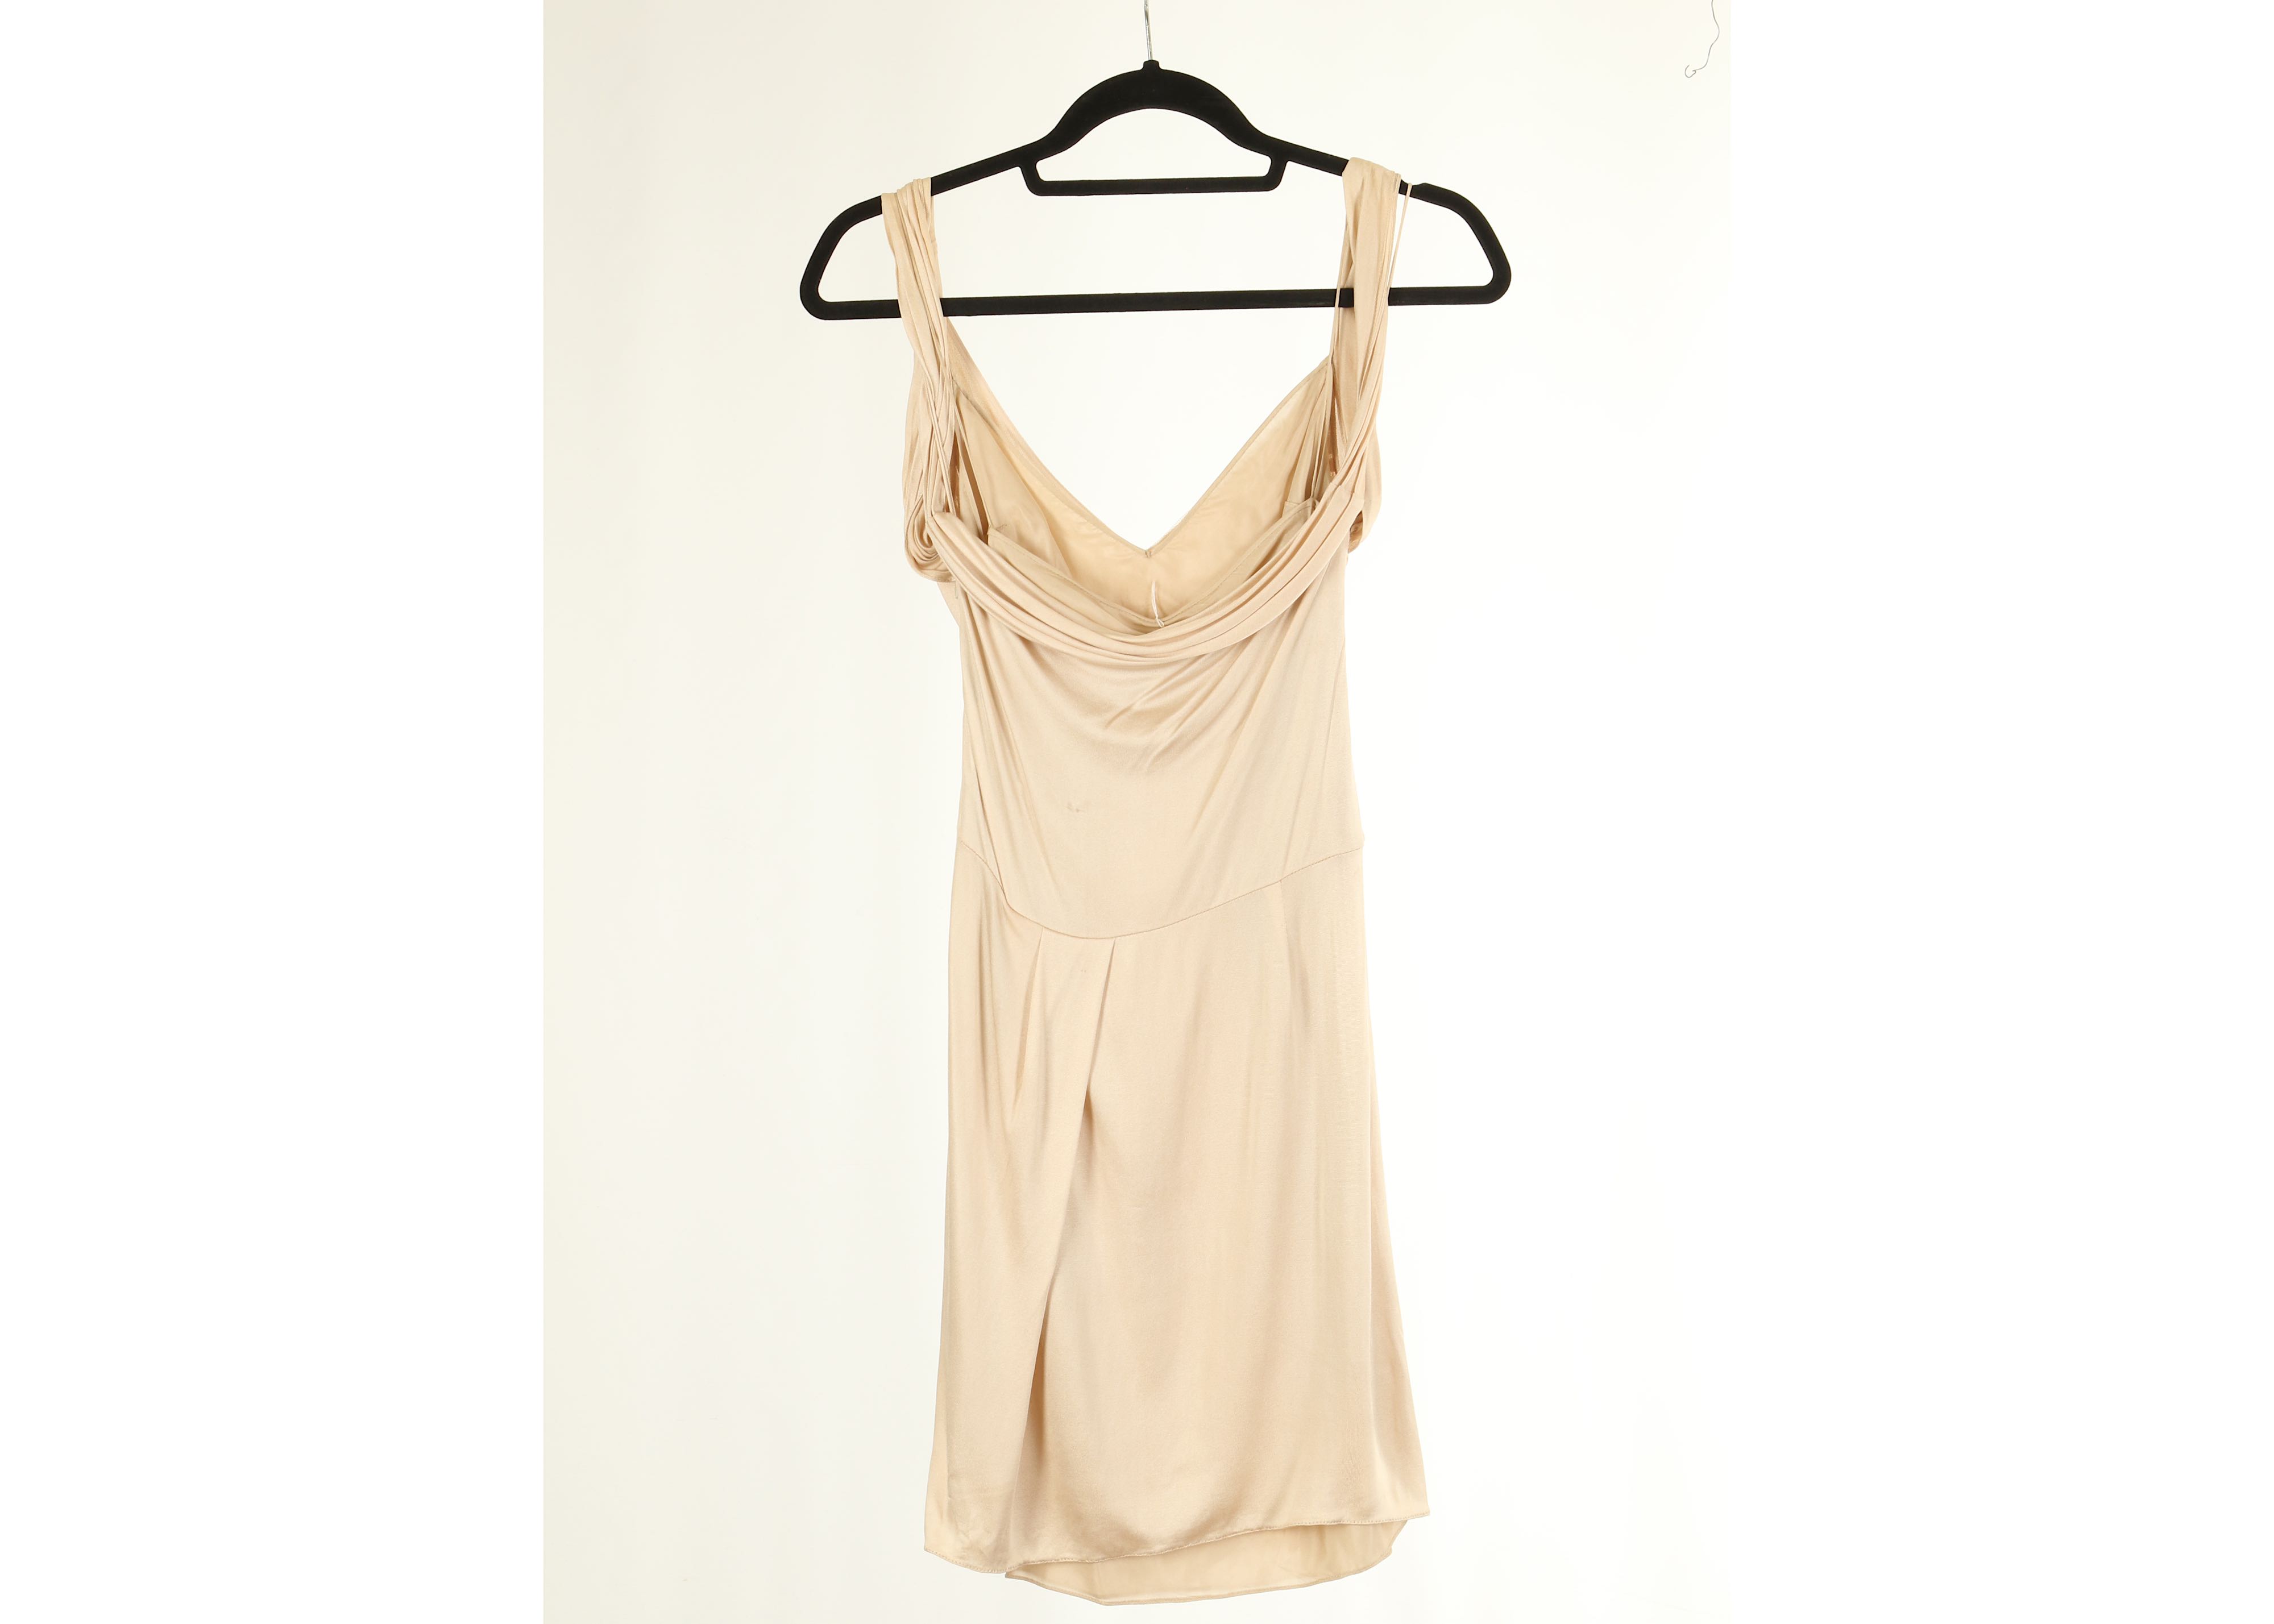 Lot 491 - Christian Dior Nude Dress, 2000s, draped